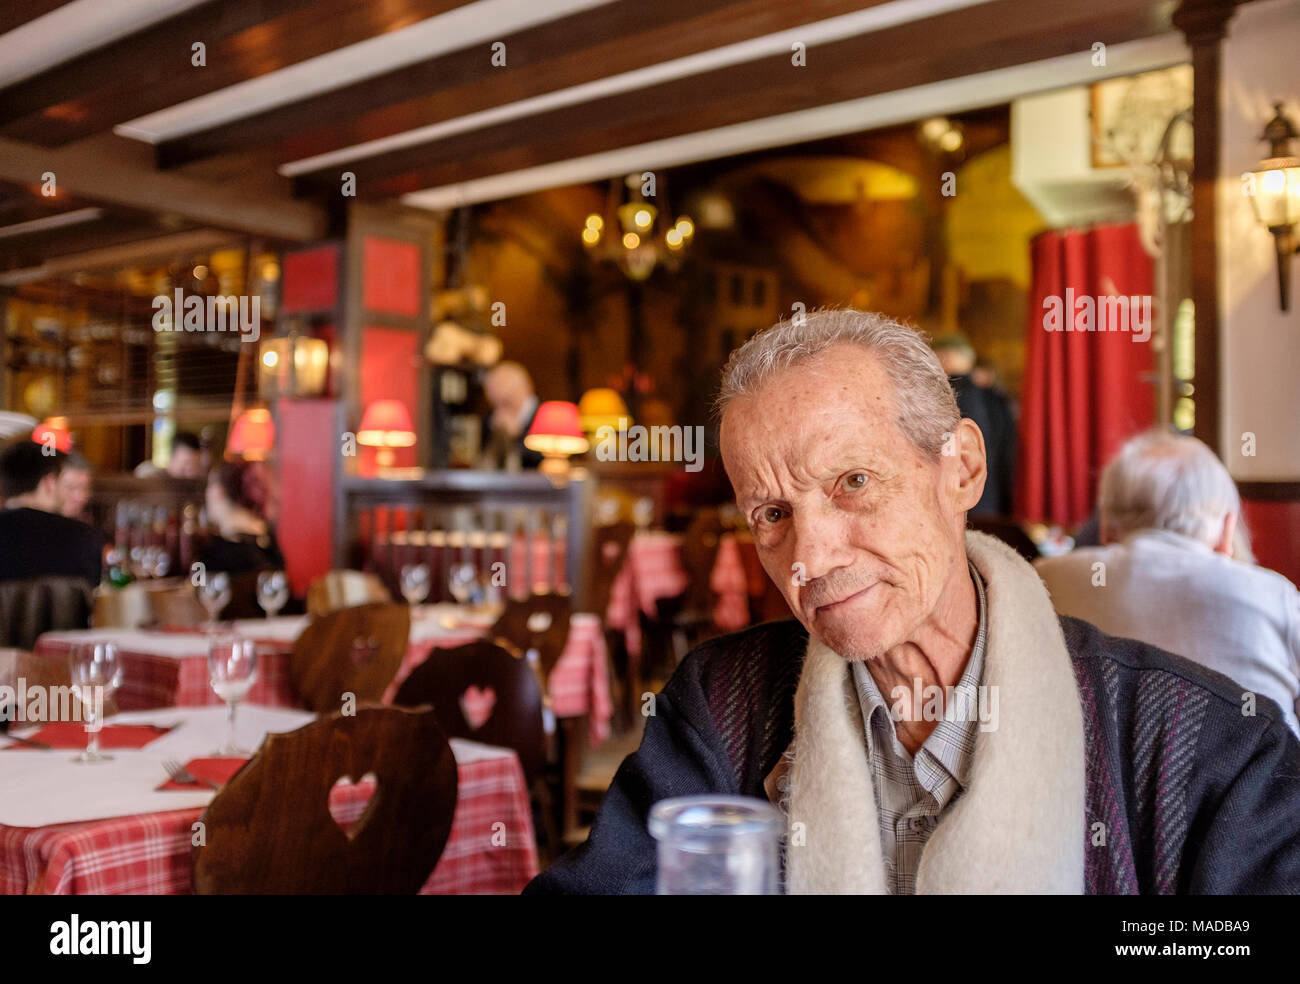 Senior man portrait, Renard Prêchant restaurant interior, Strasbourg, Alsace, France, Europe, Stock Photo